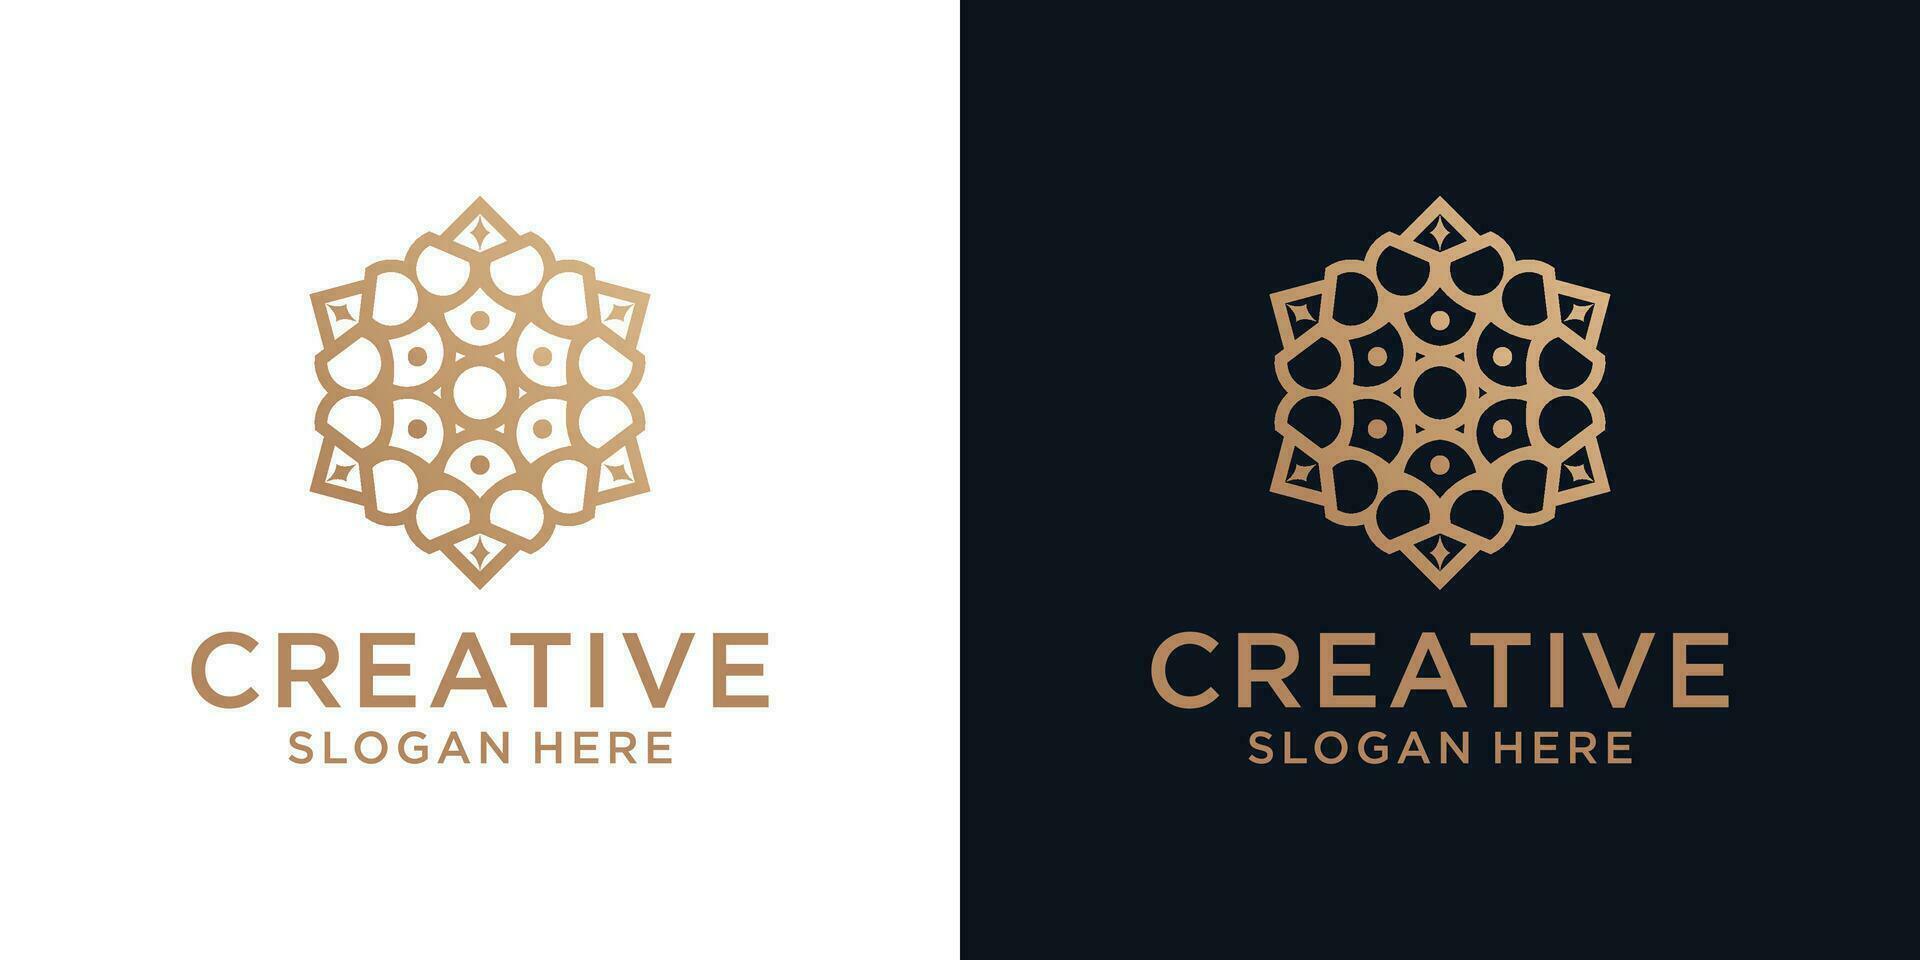 Floral ornament logo design abstract vector